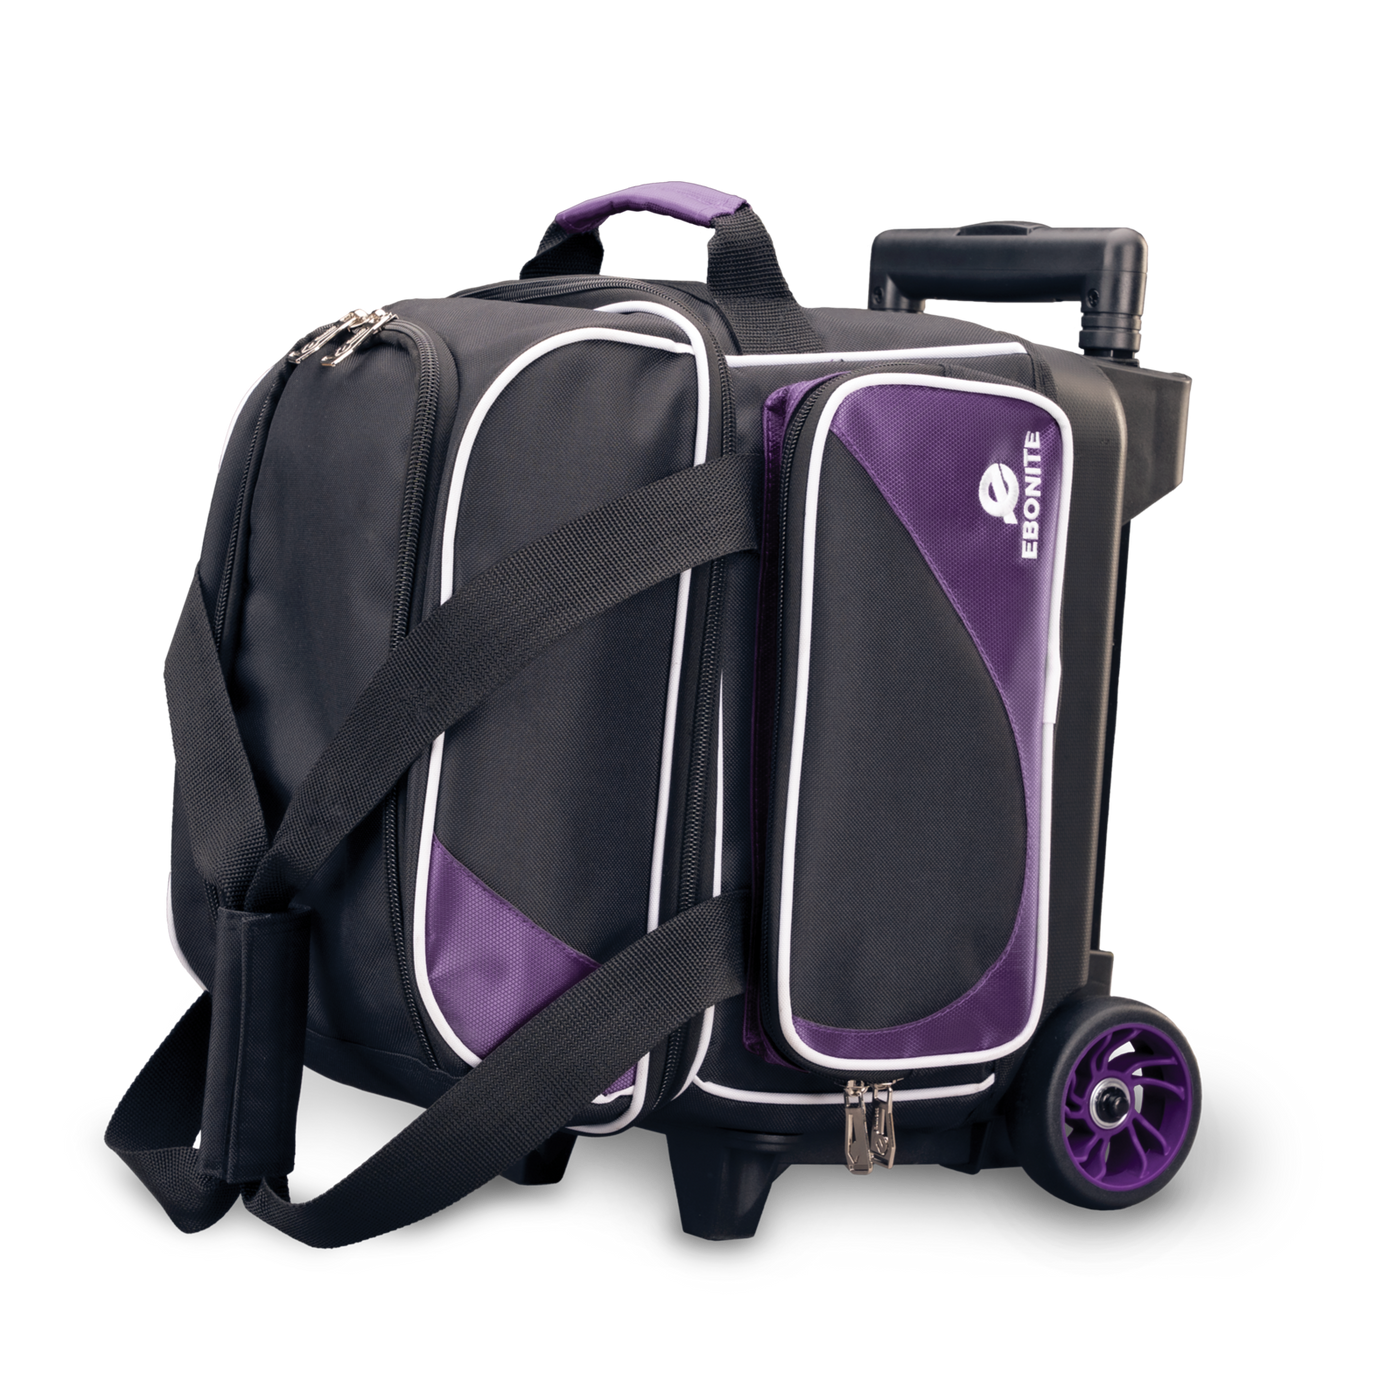 Ebonite Single Roller in Purple and Black